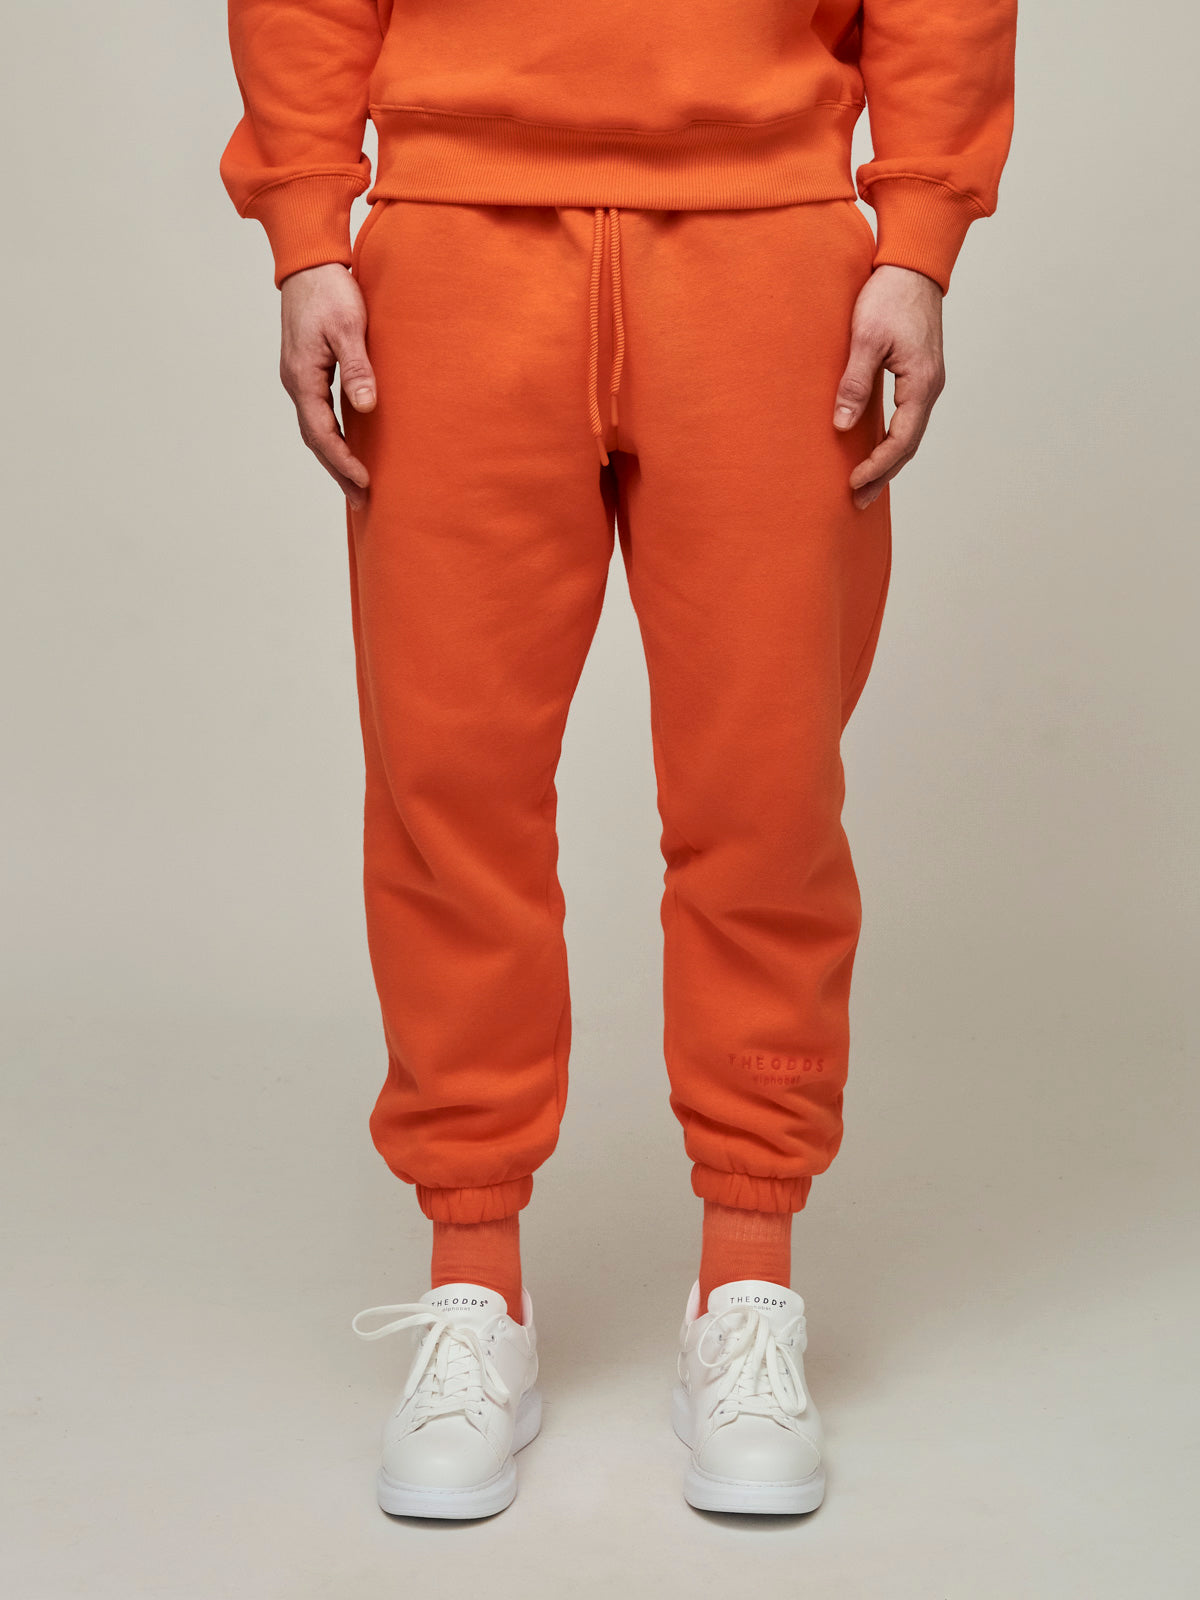 The Odd Orange Lounge Pants/ alphabet